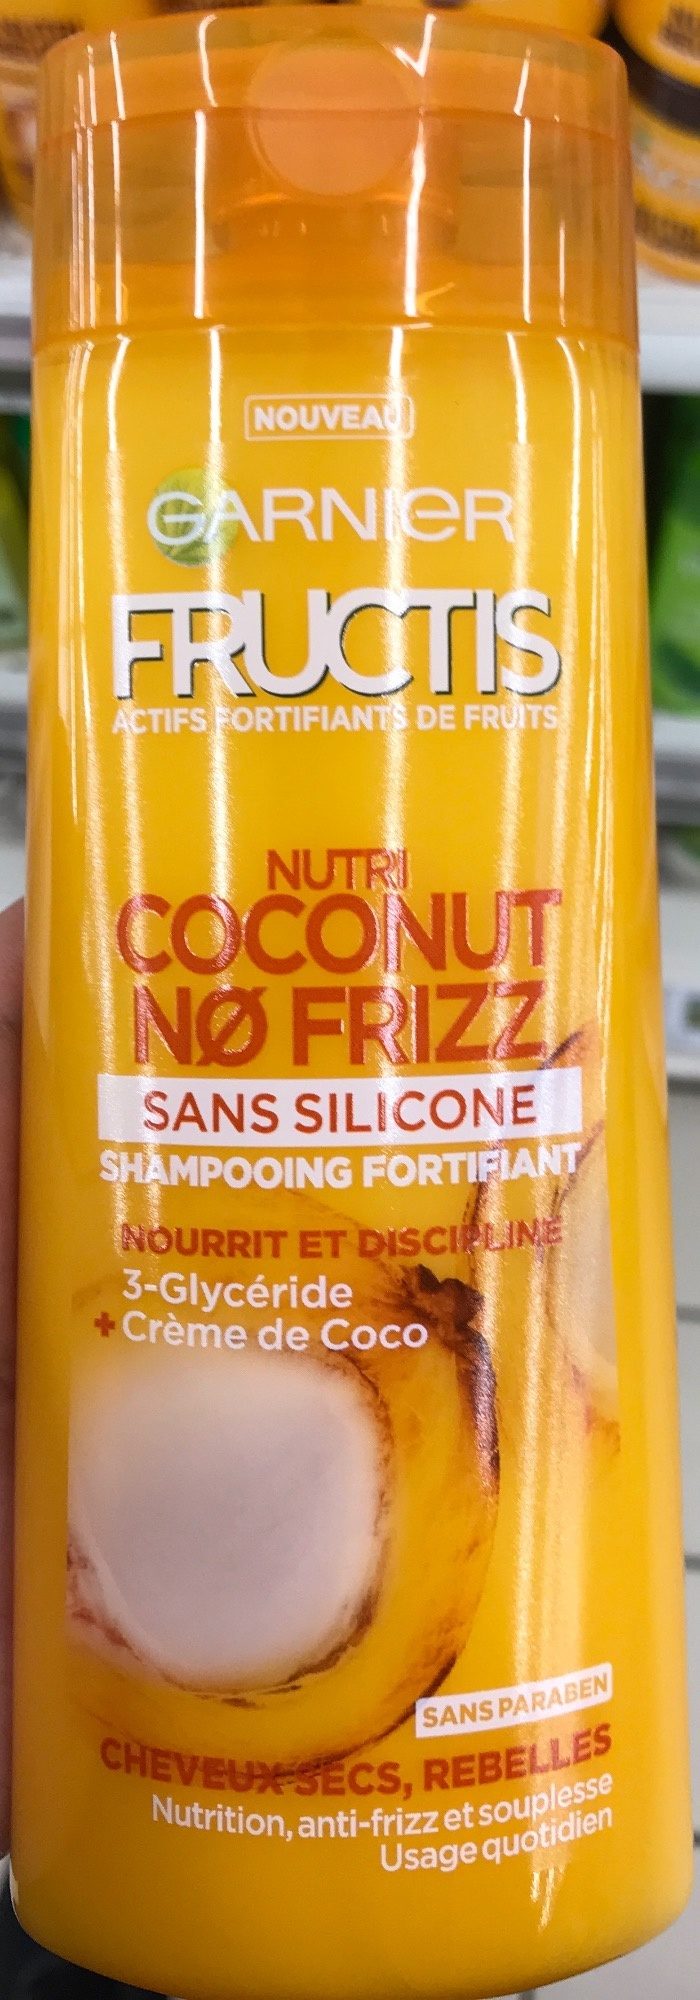 Fructis Nutri Coconut No Frizz - Tuote - fr